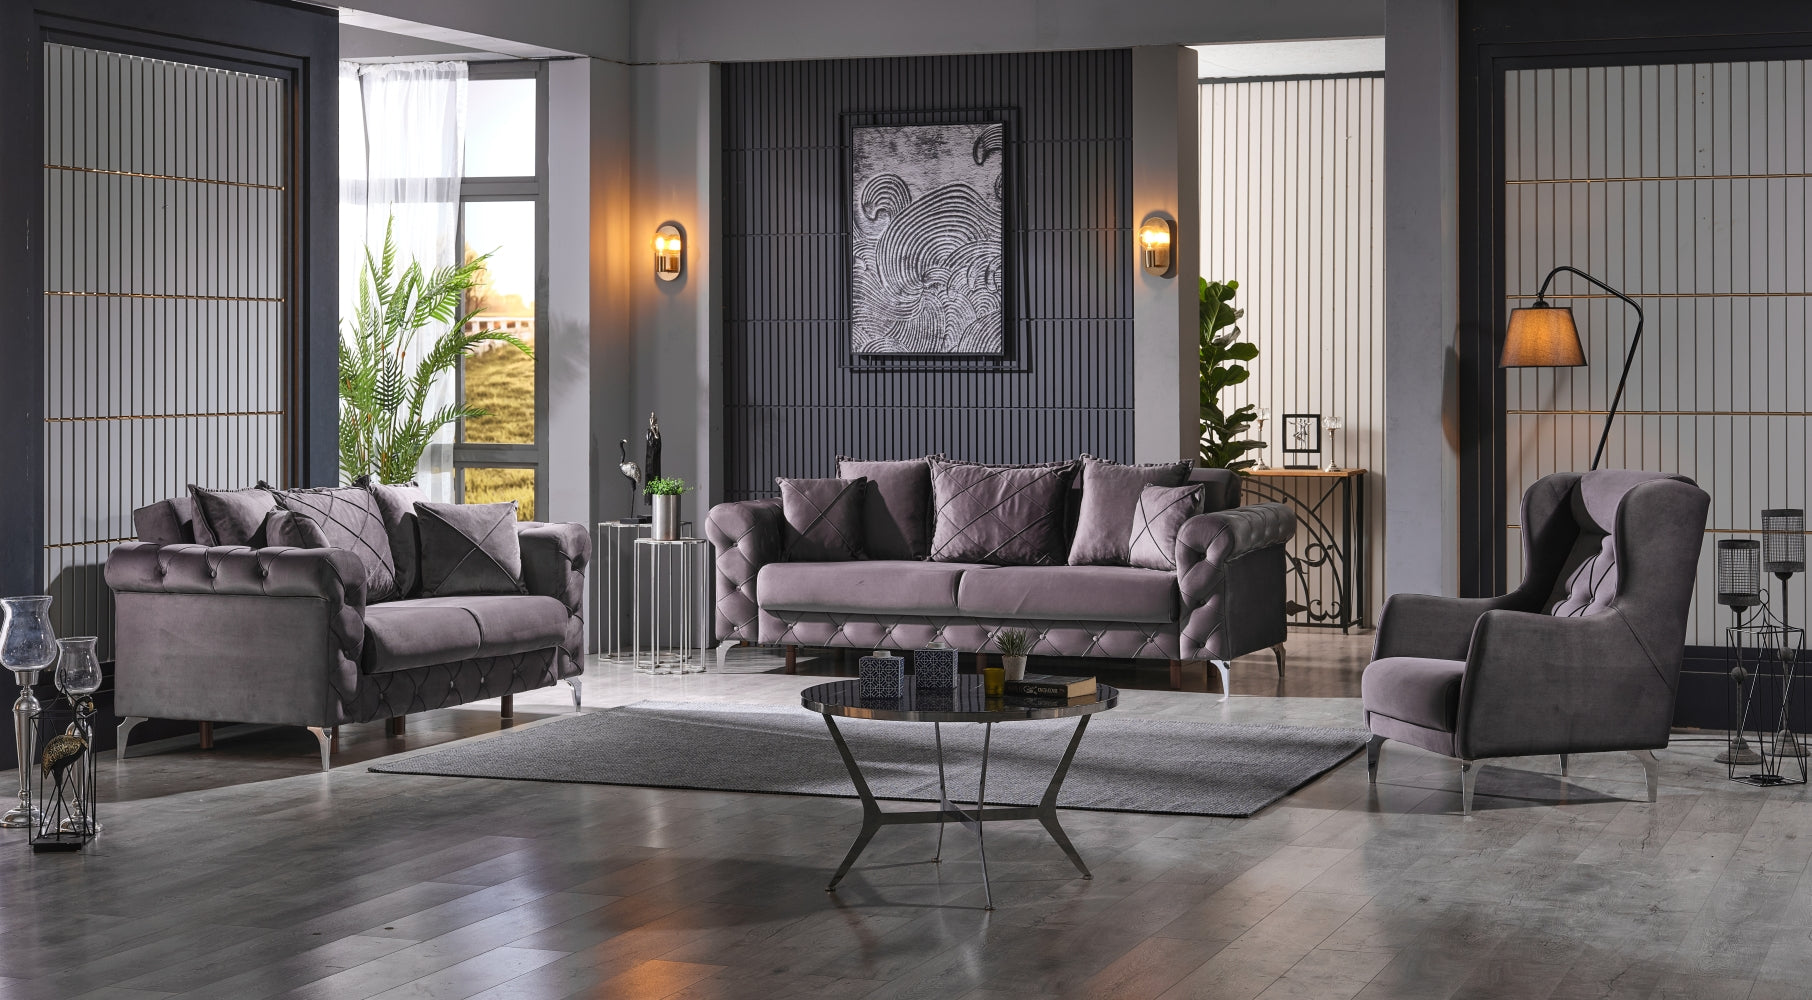 Riva Convertible Livingroom (1 Sofa & 1 Loveseat & 1 Chair) Grey